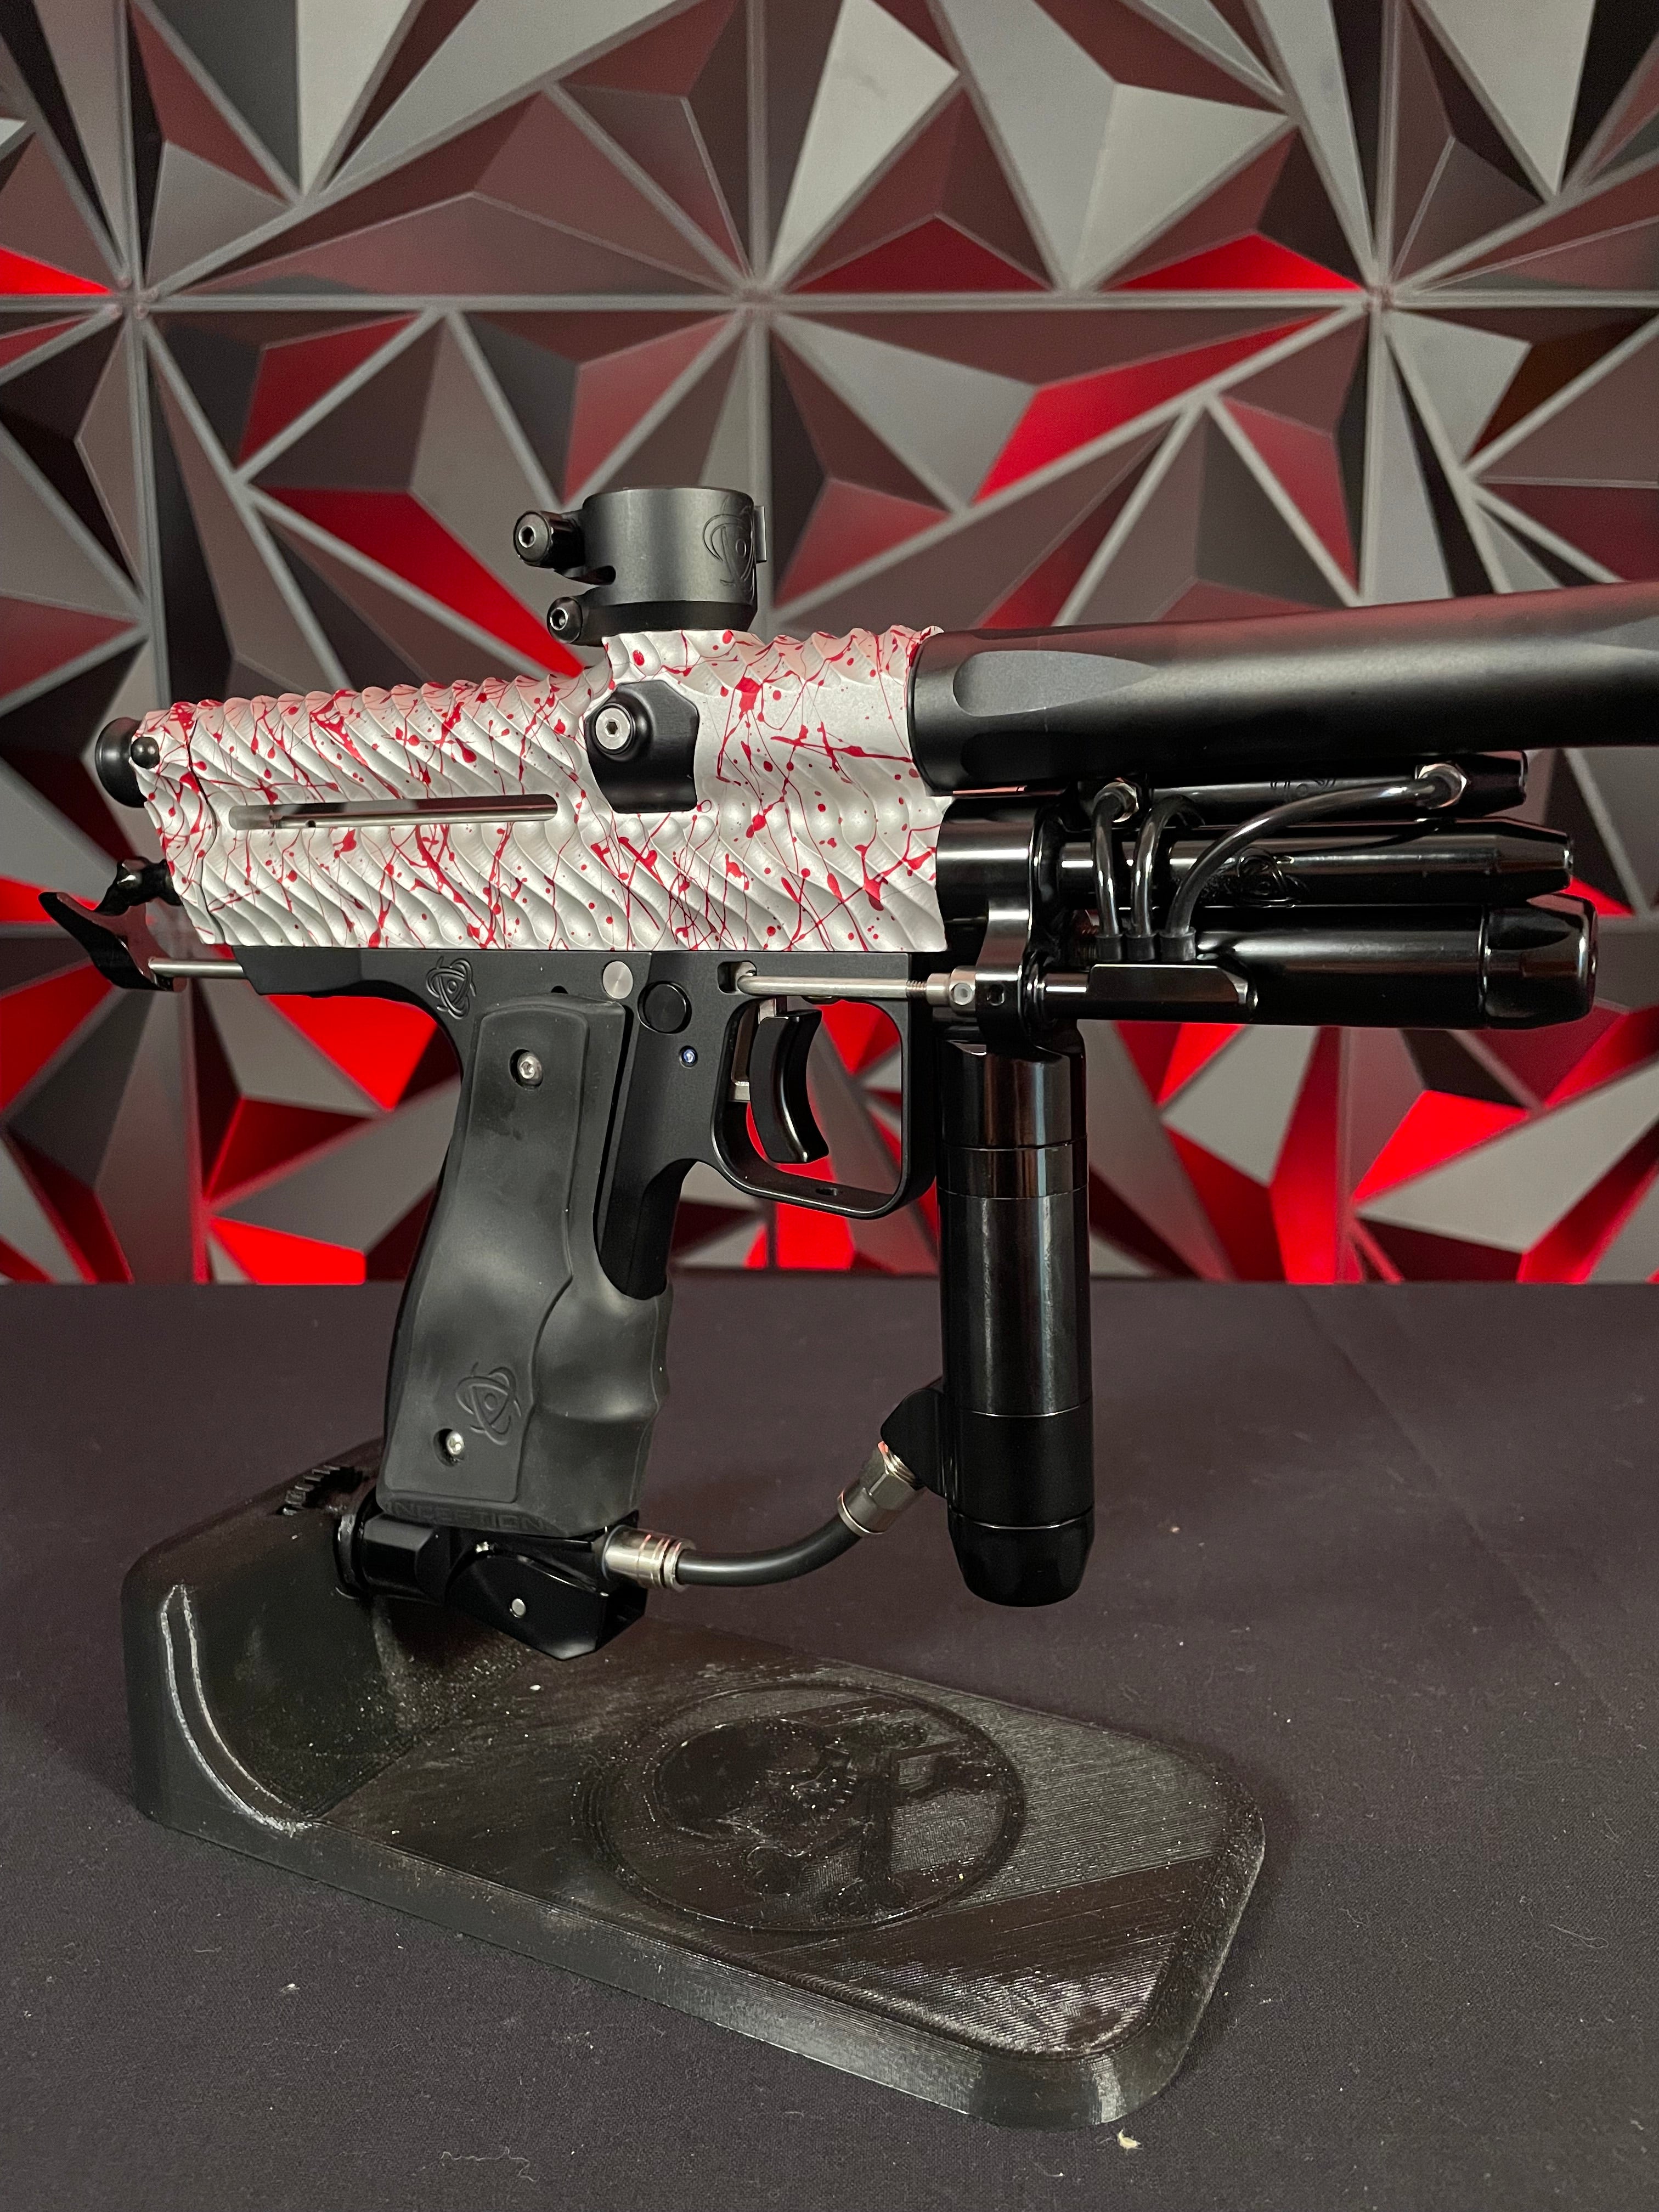 Used Inception Designs Twister Autococker Paintball Gun - Red Splash #128 w/4 Backs & 2 Tips